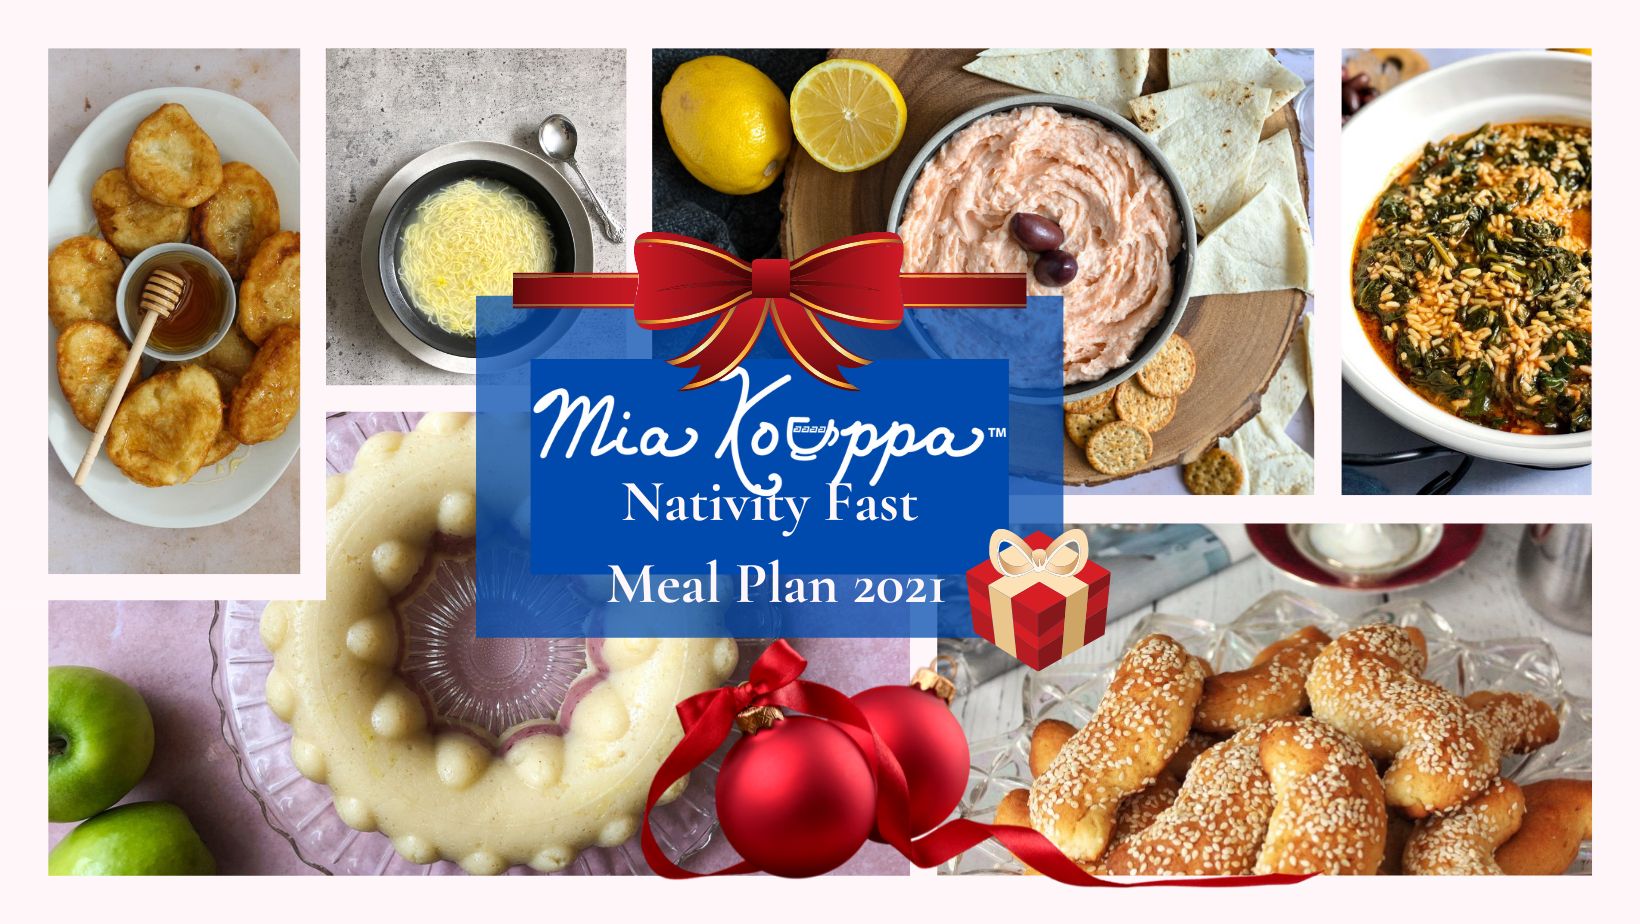 Mia Kouppa Nativity Fast Meal Plan – 2021